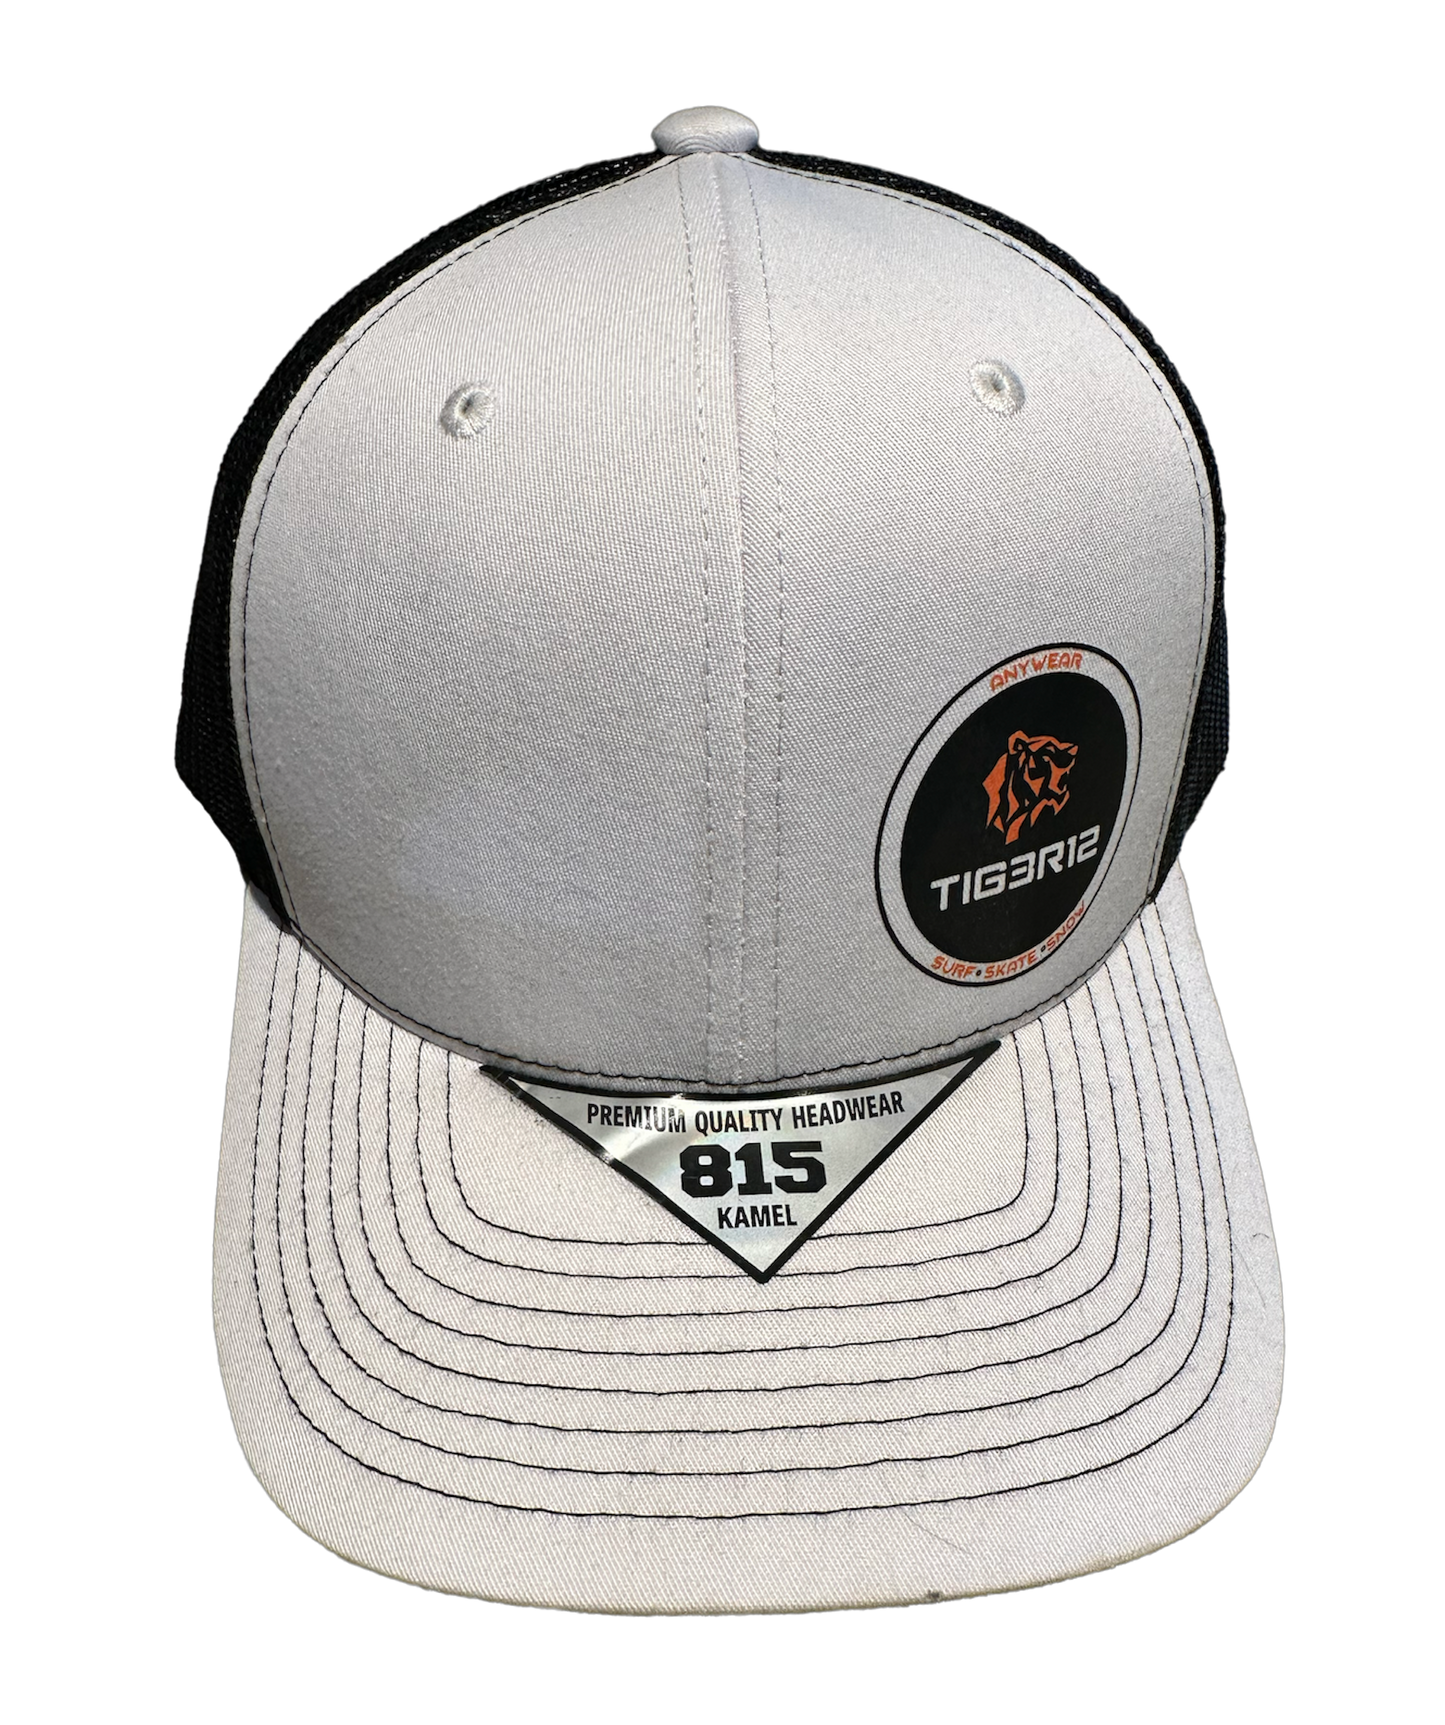 S*S*S - Kamel 815 Snapback Mash Trucker Hat